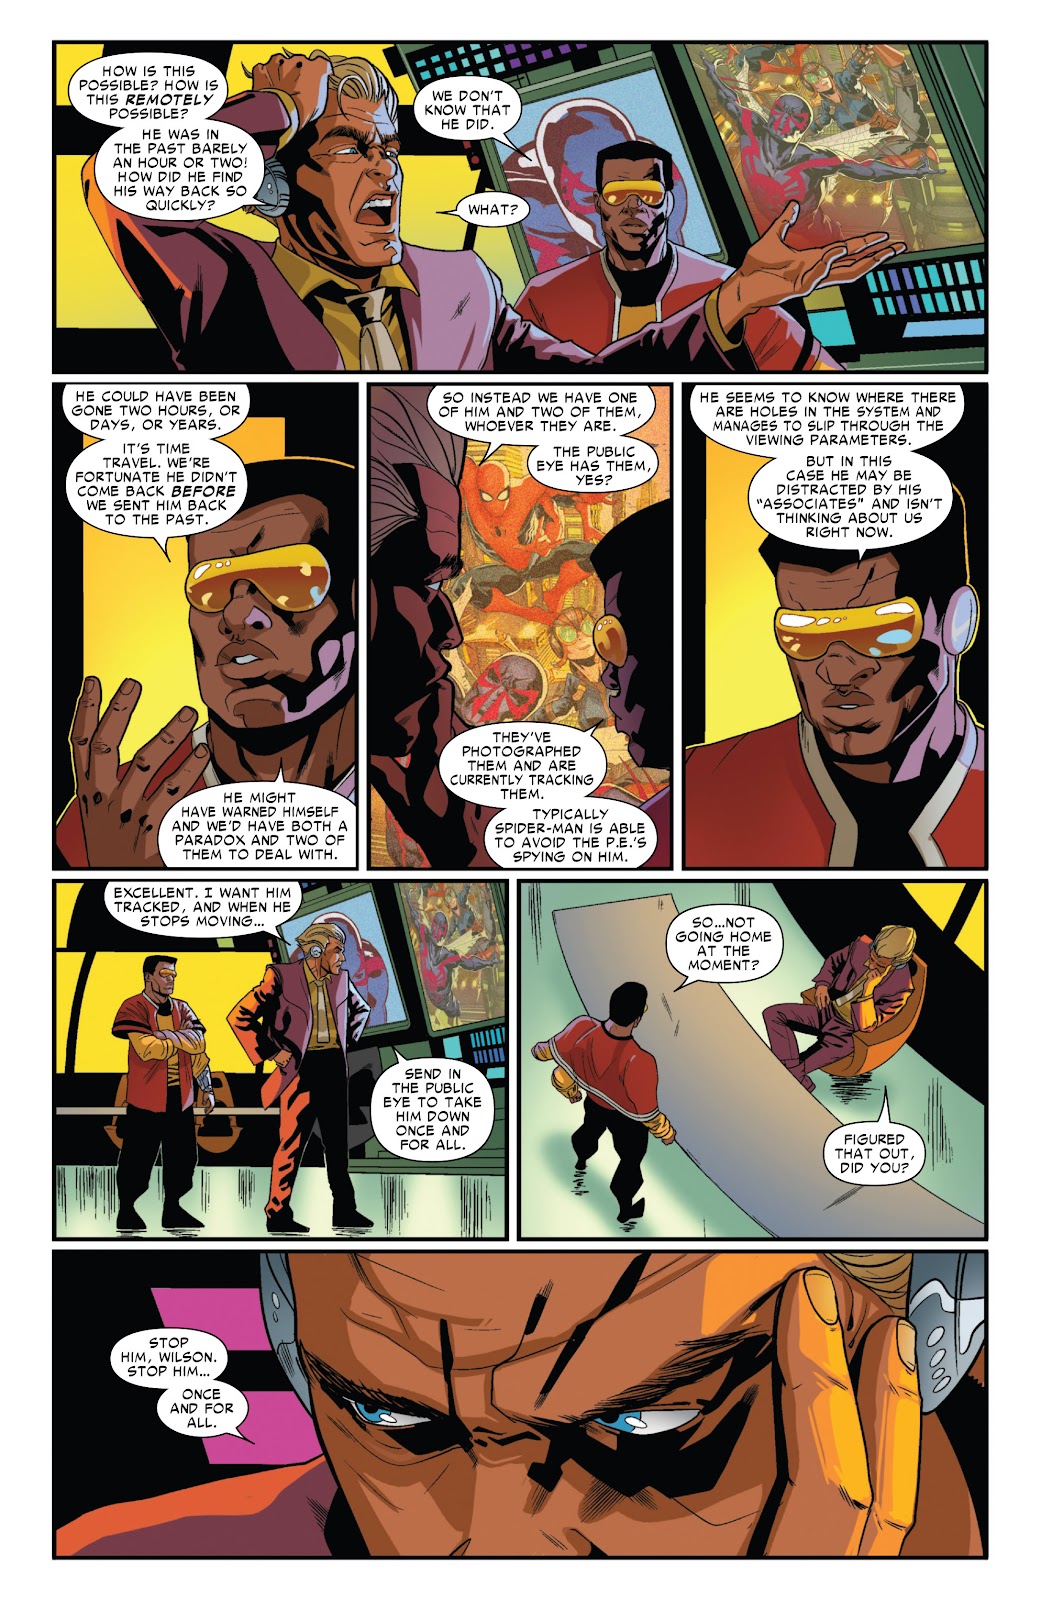 Spider-Man 2099 (2014) issue 6 - Page 5